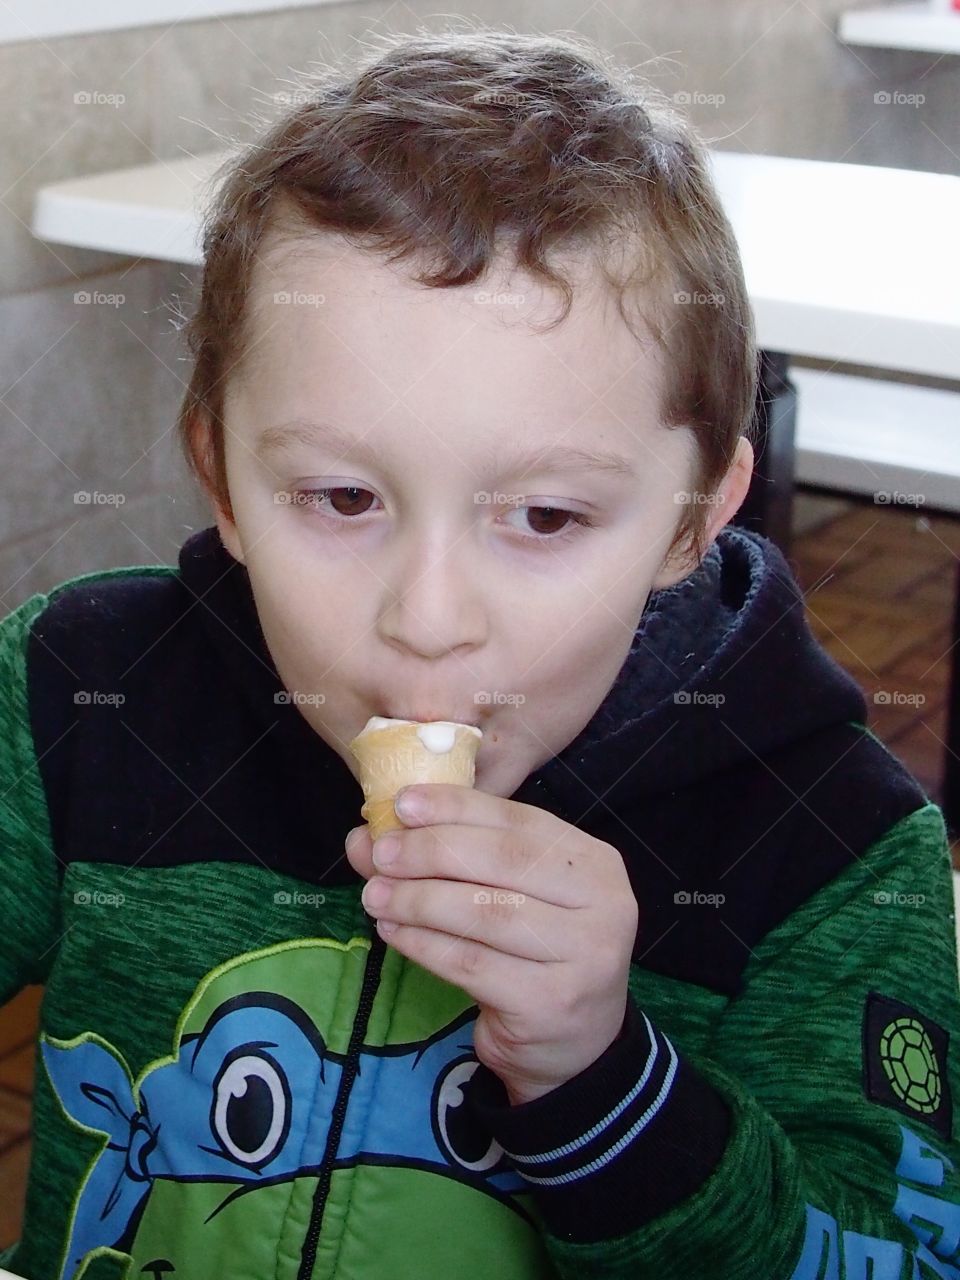 A little boy eating his vanilla ice cream cone for dessert. 